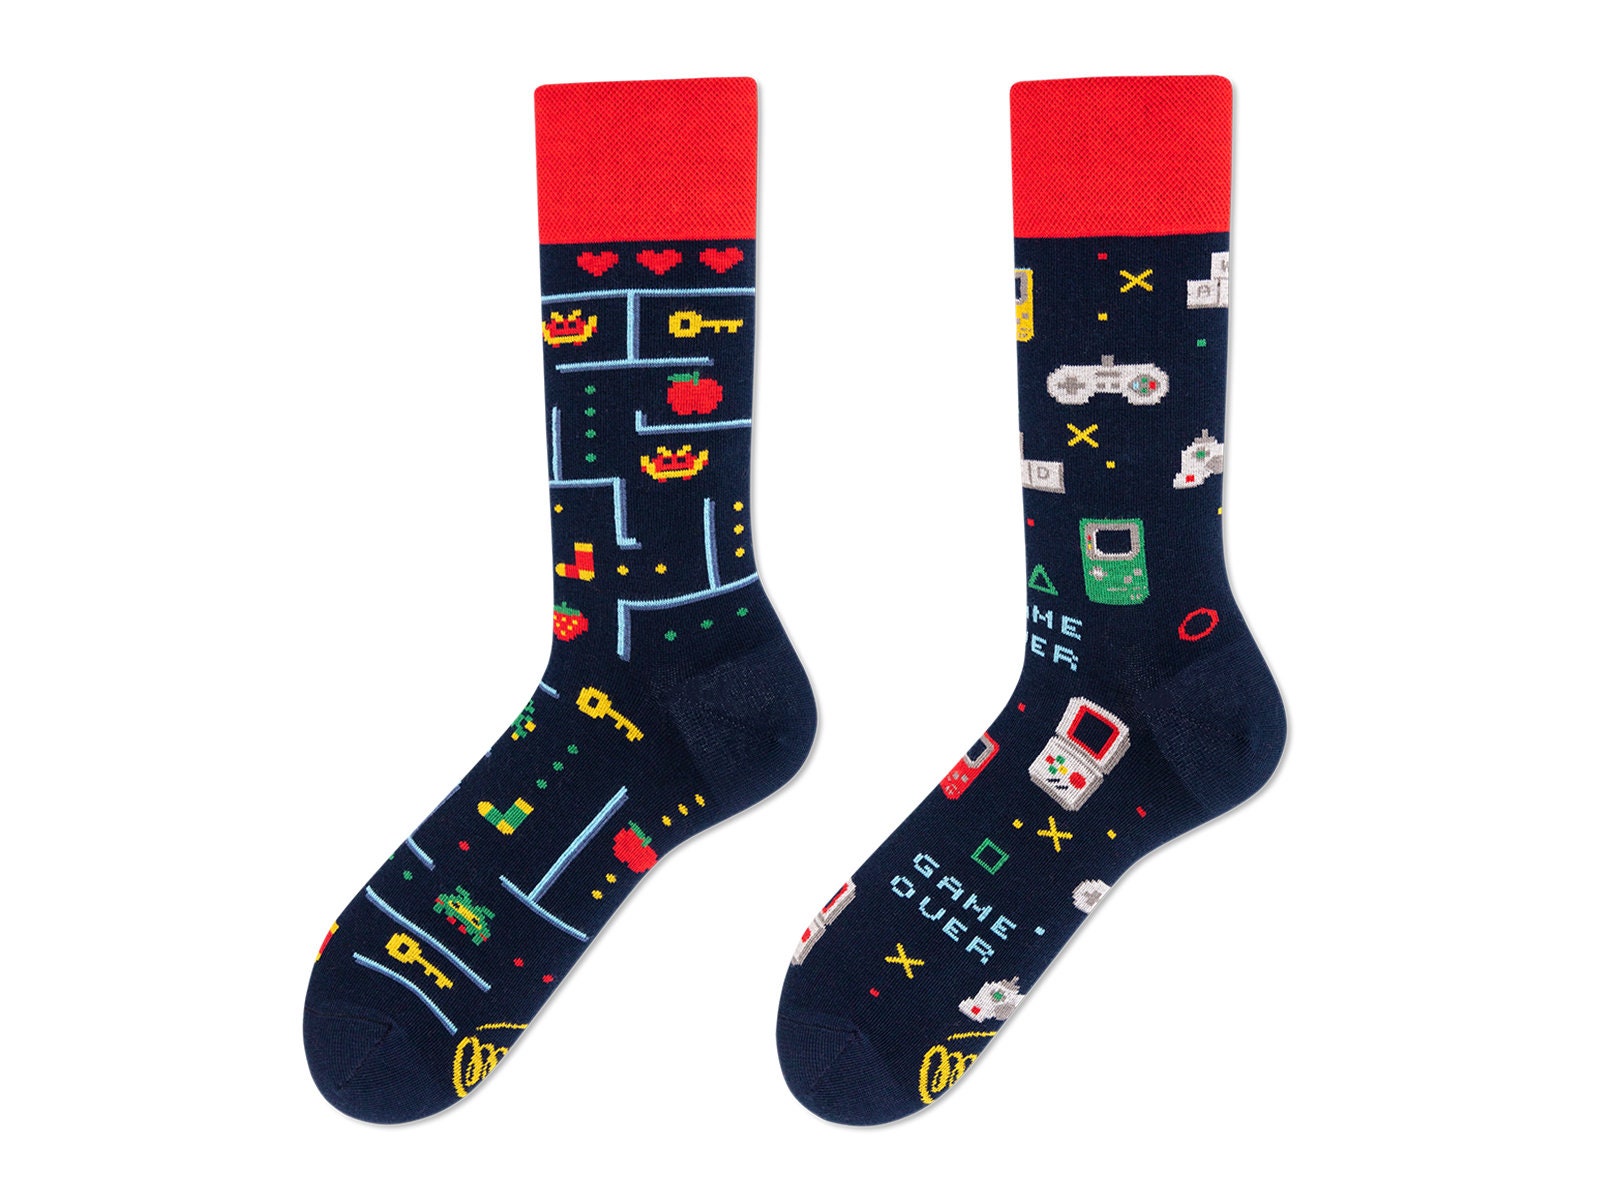 Discover Gaming socks from MANY MORNINGS Socks